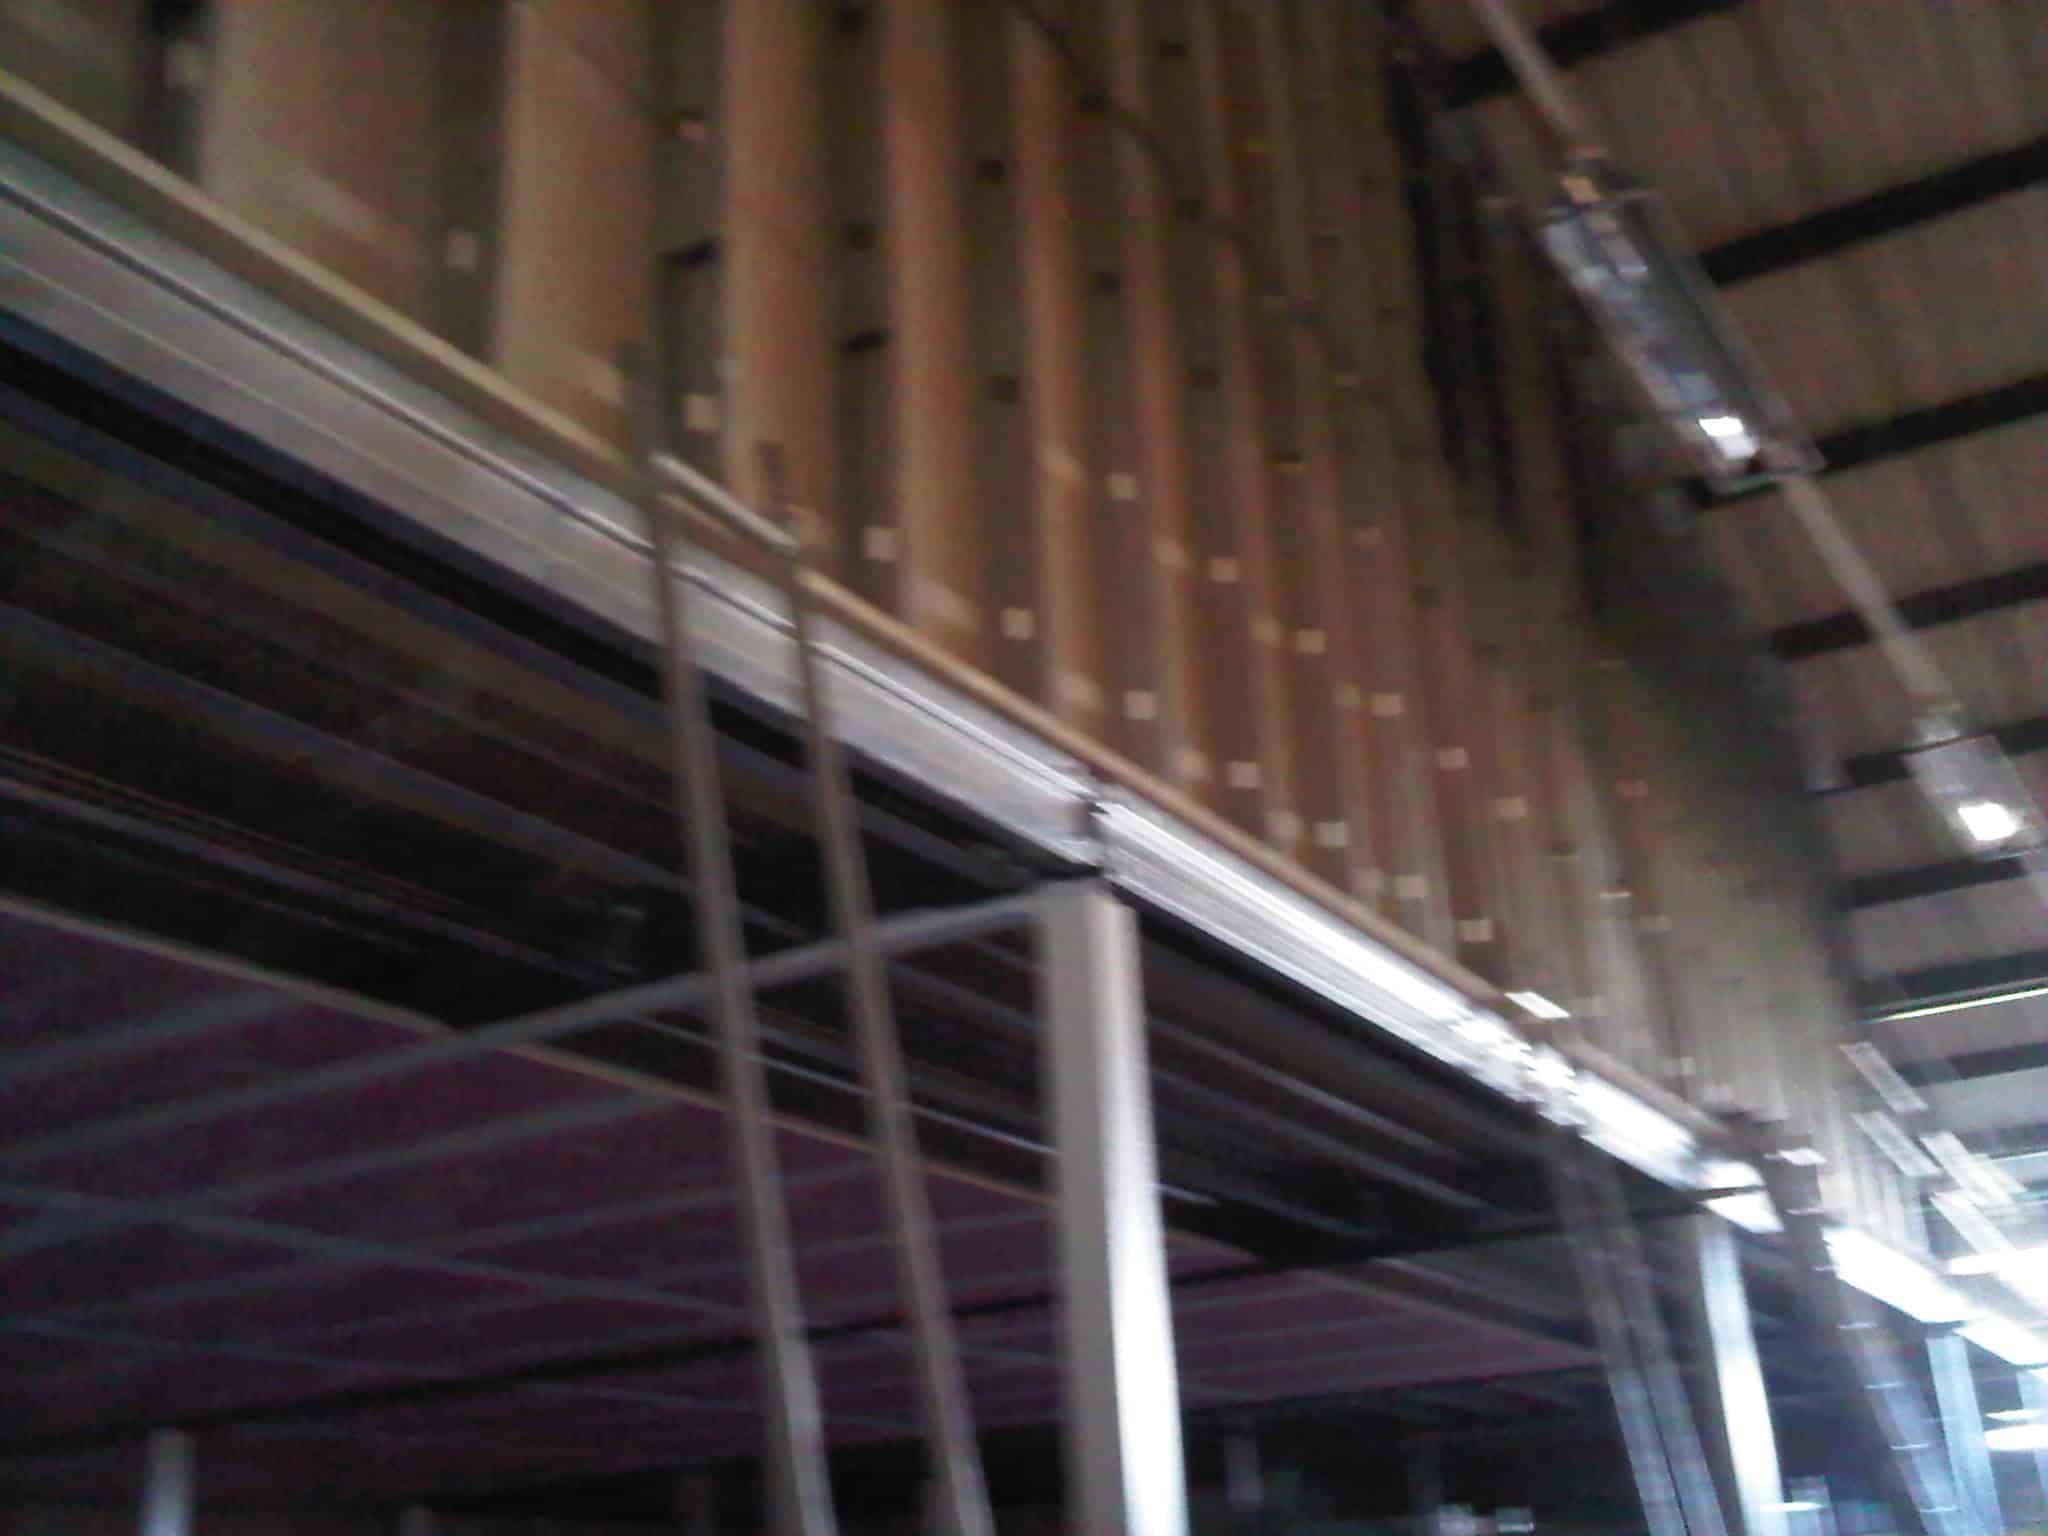 mezzanine floor construction